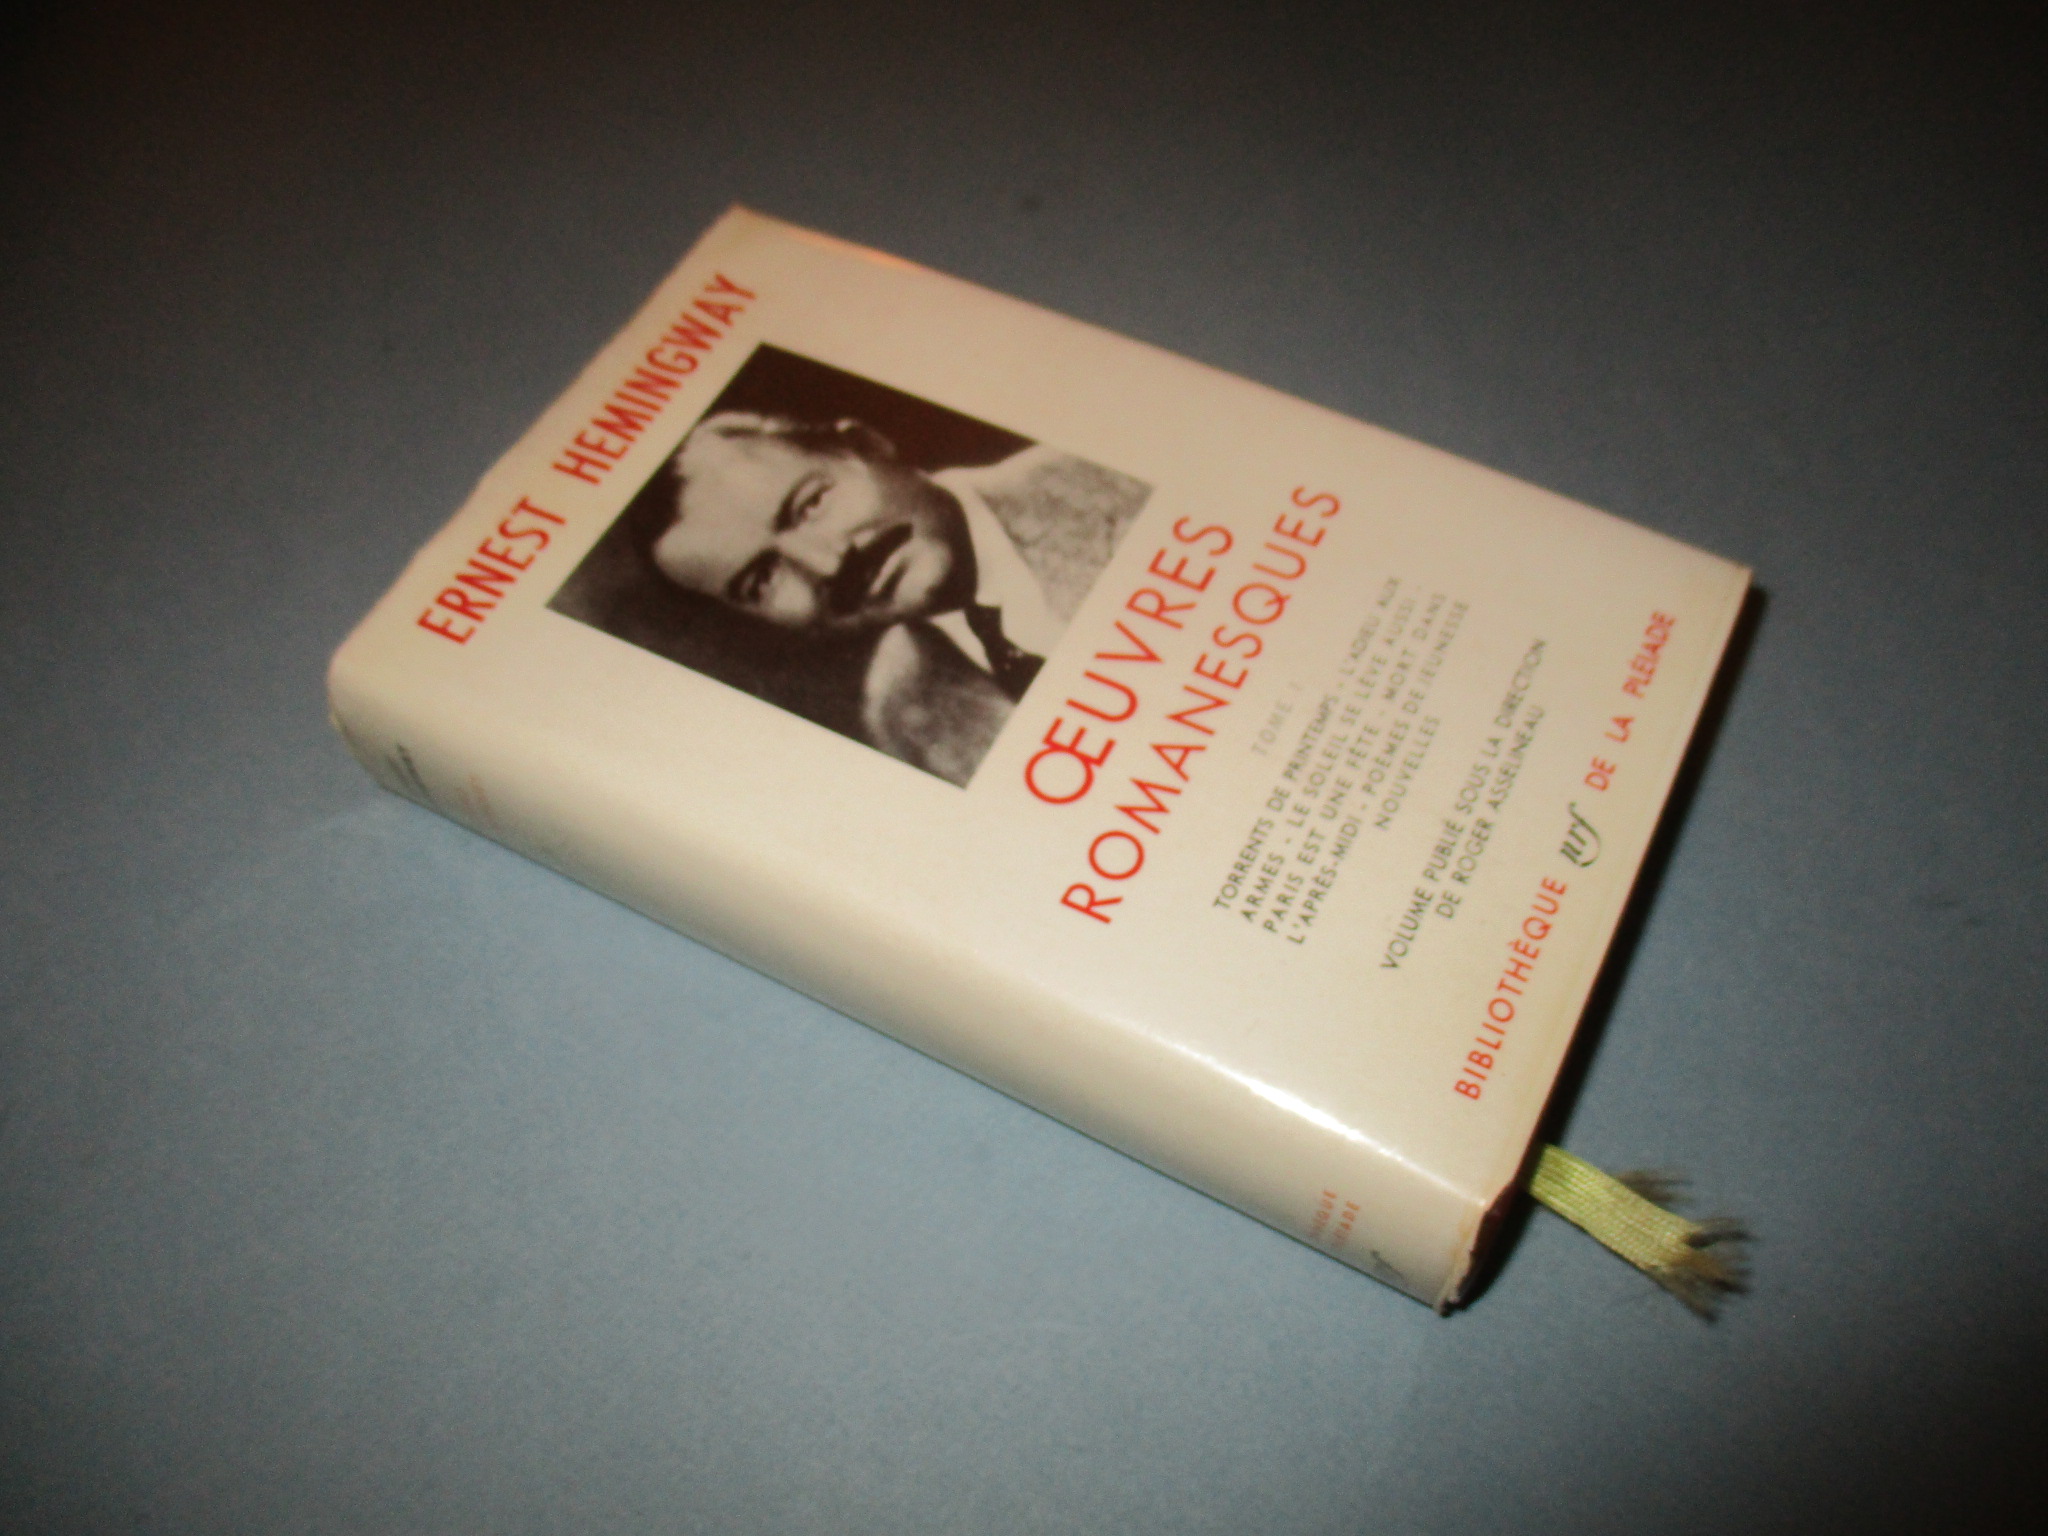 Oeuvres romanesques I, tome 1, Ernest Hemingway, La Pléiade 1966